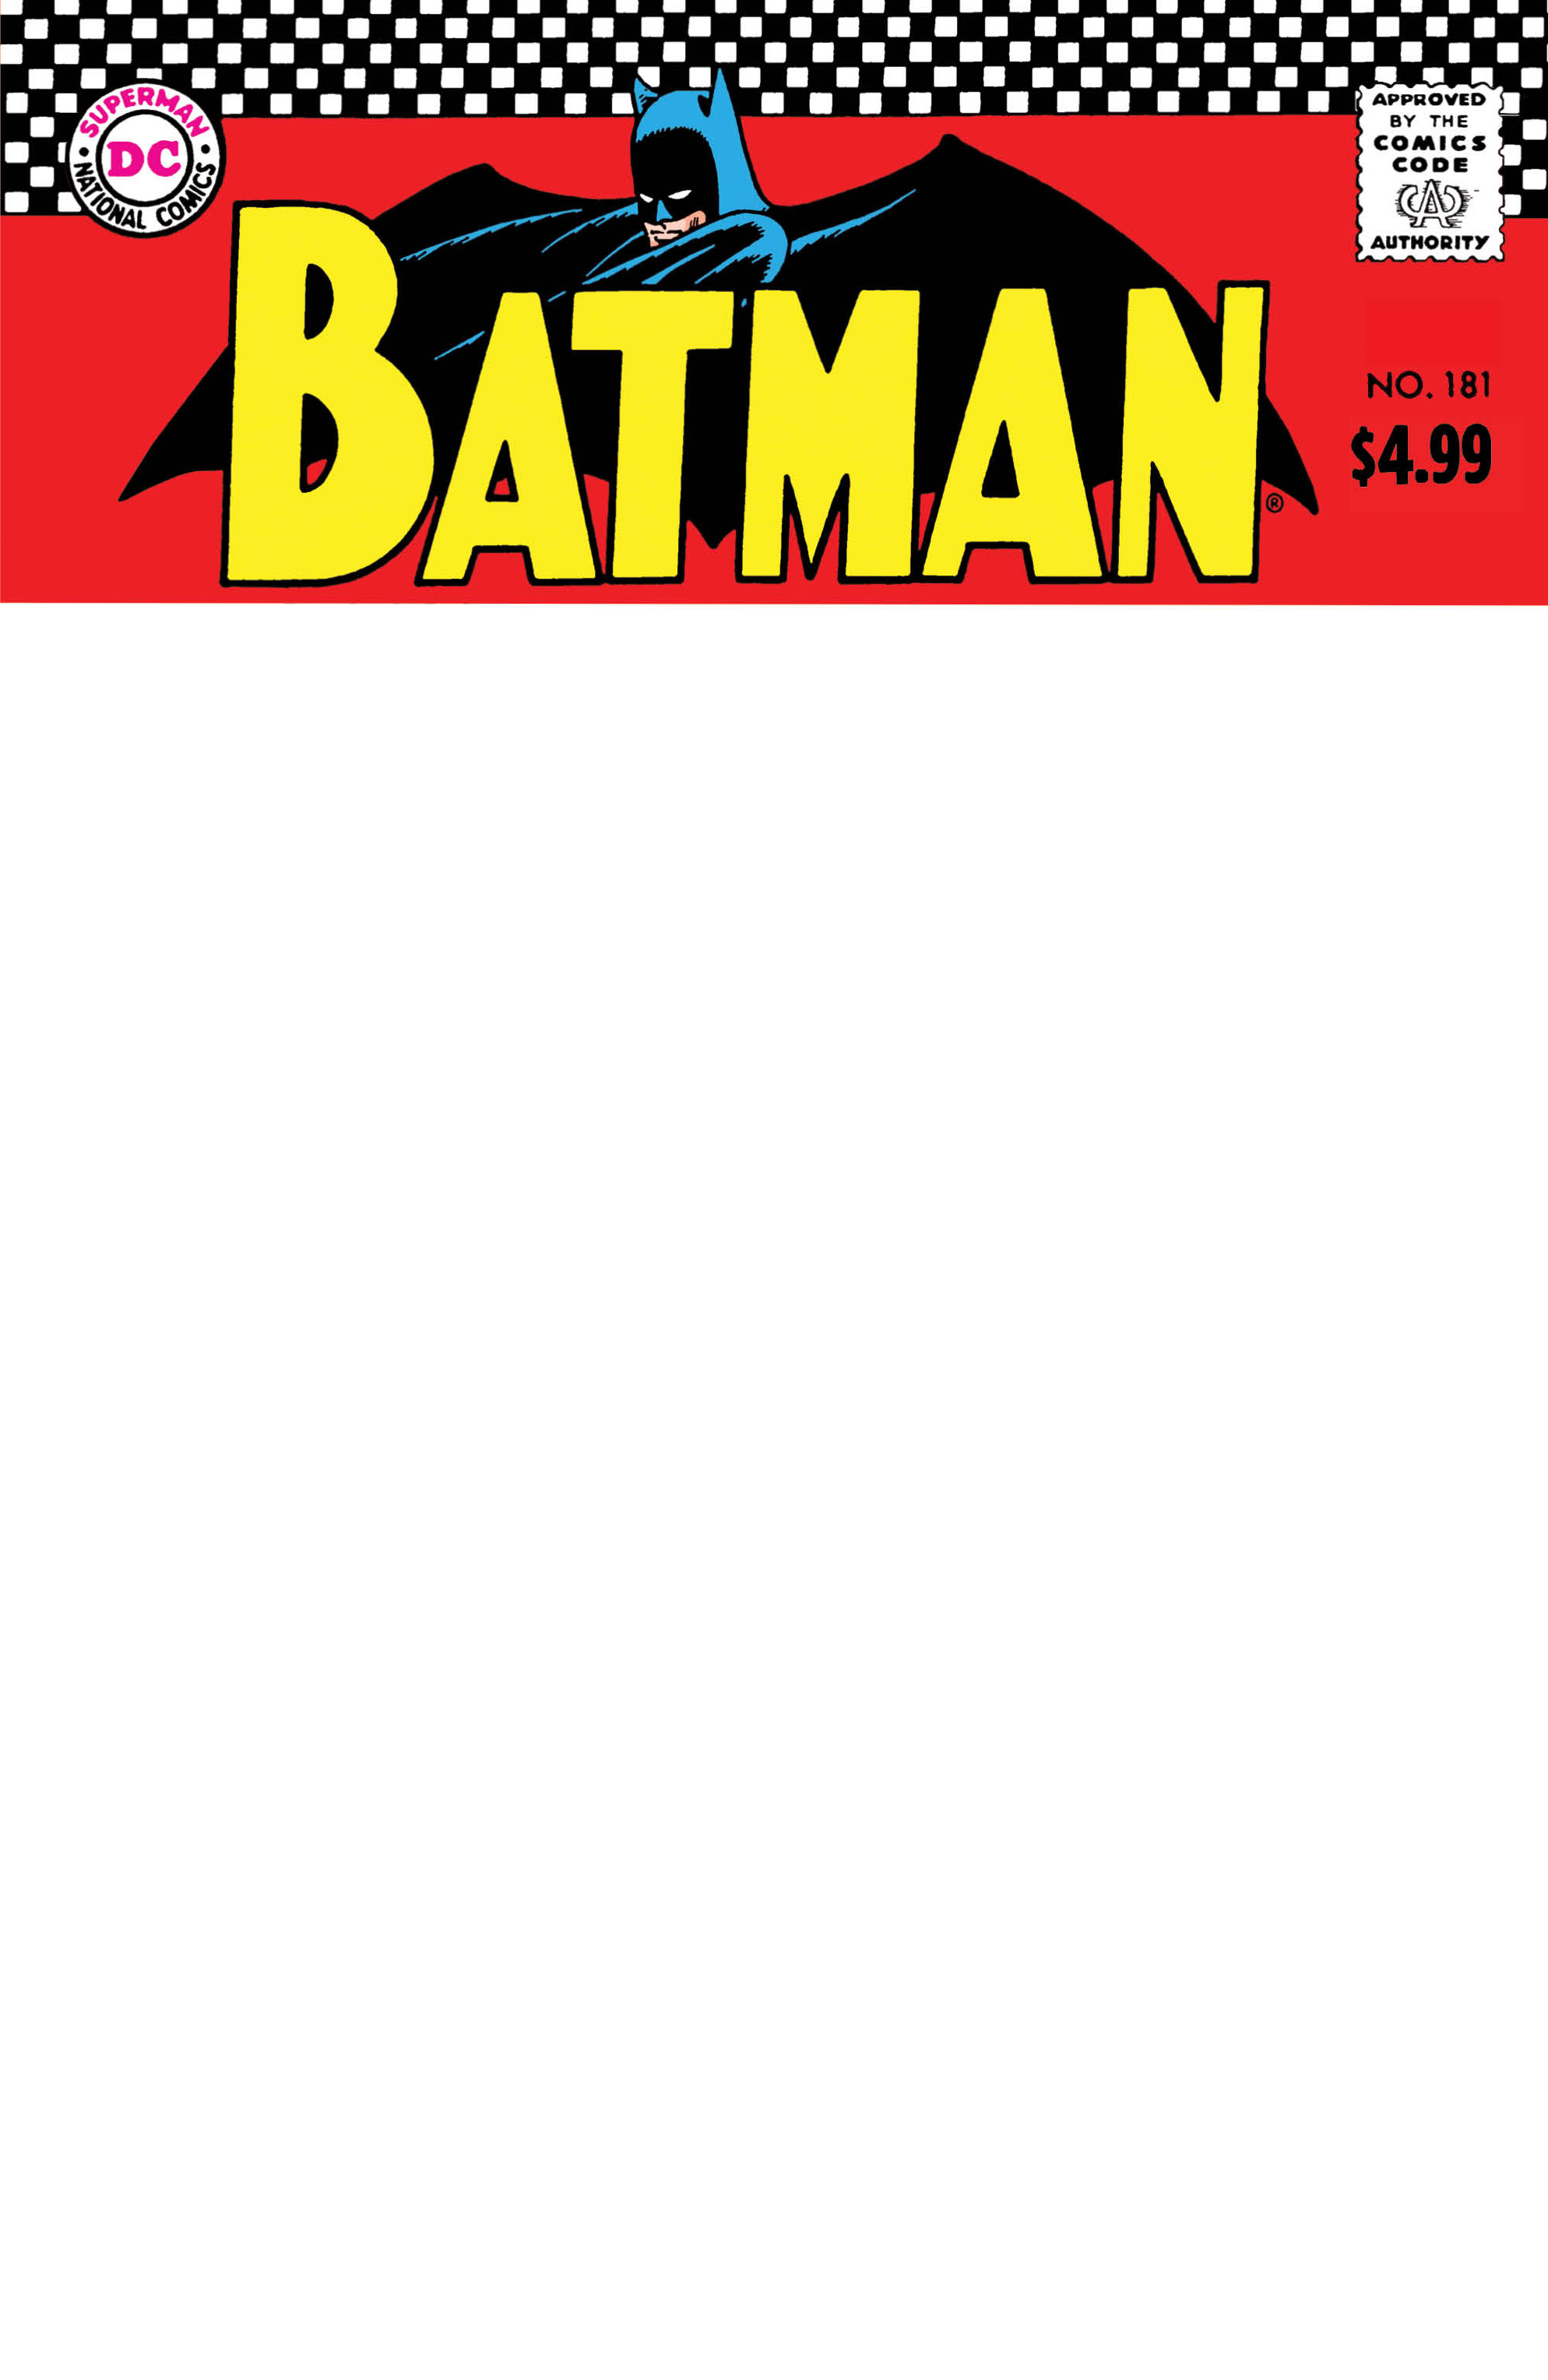 blank batman logo